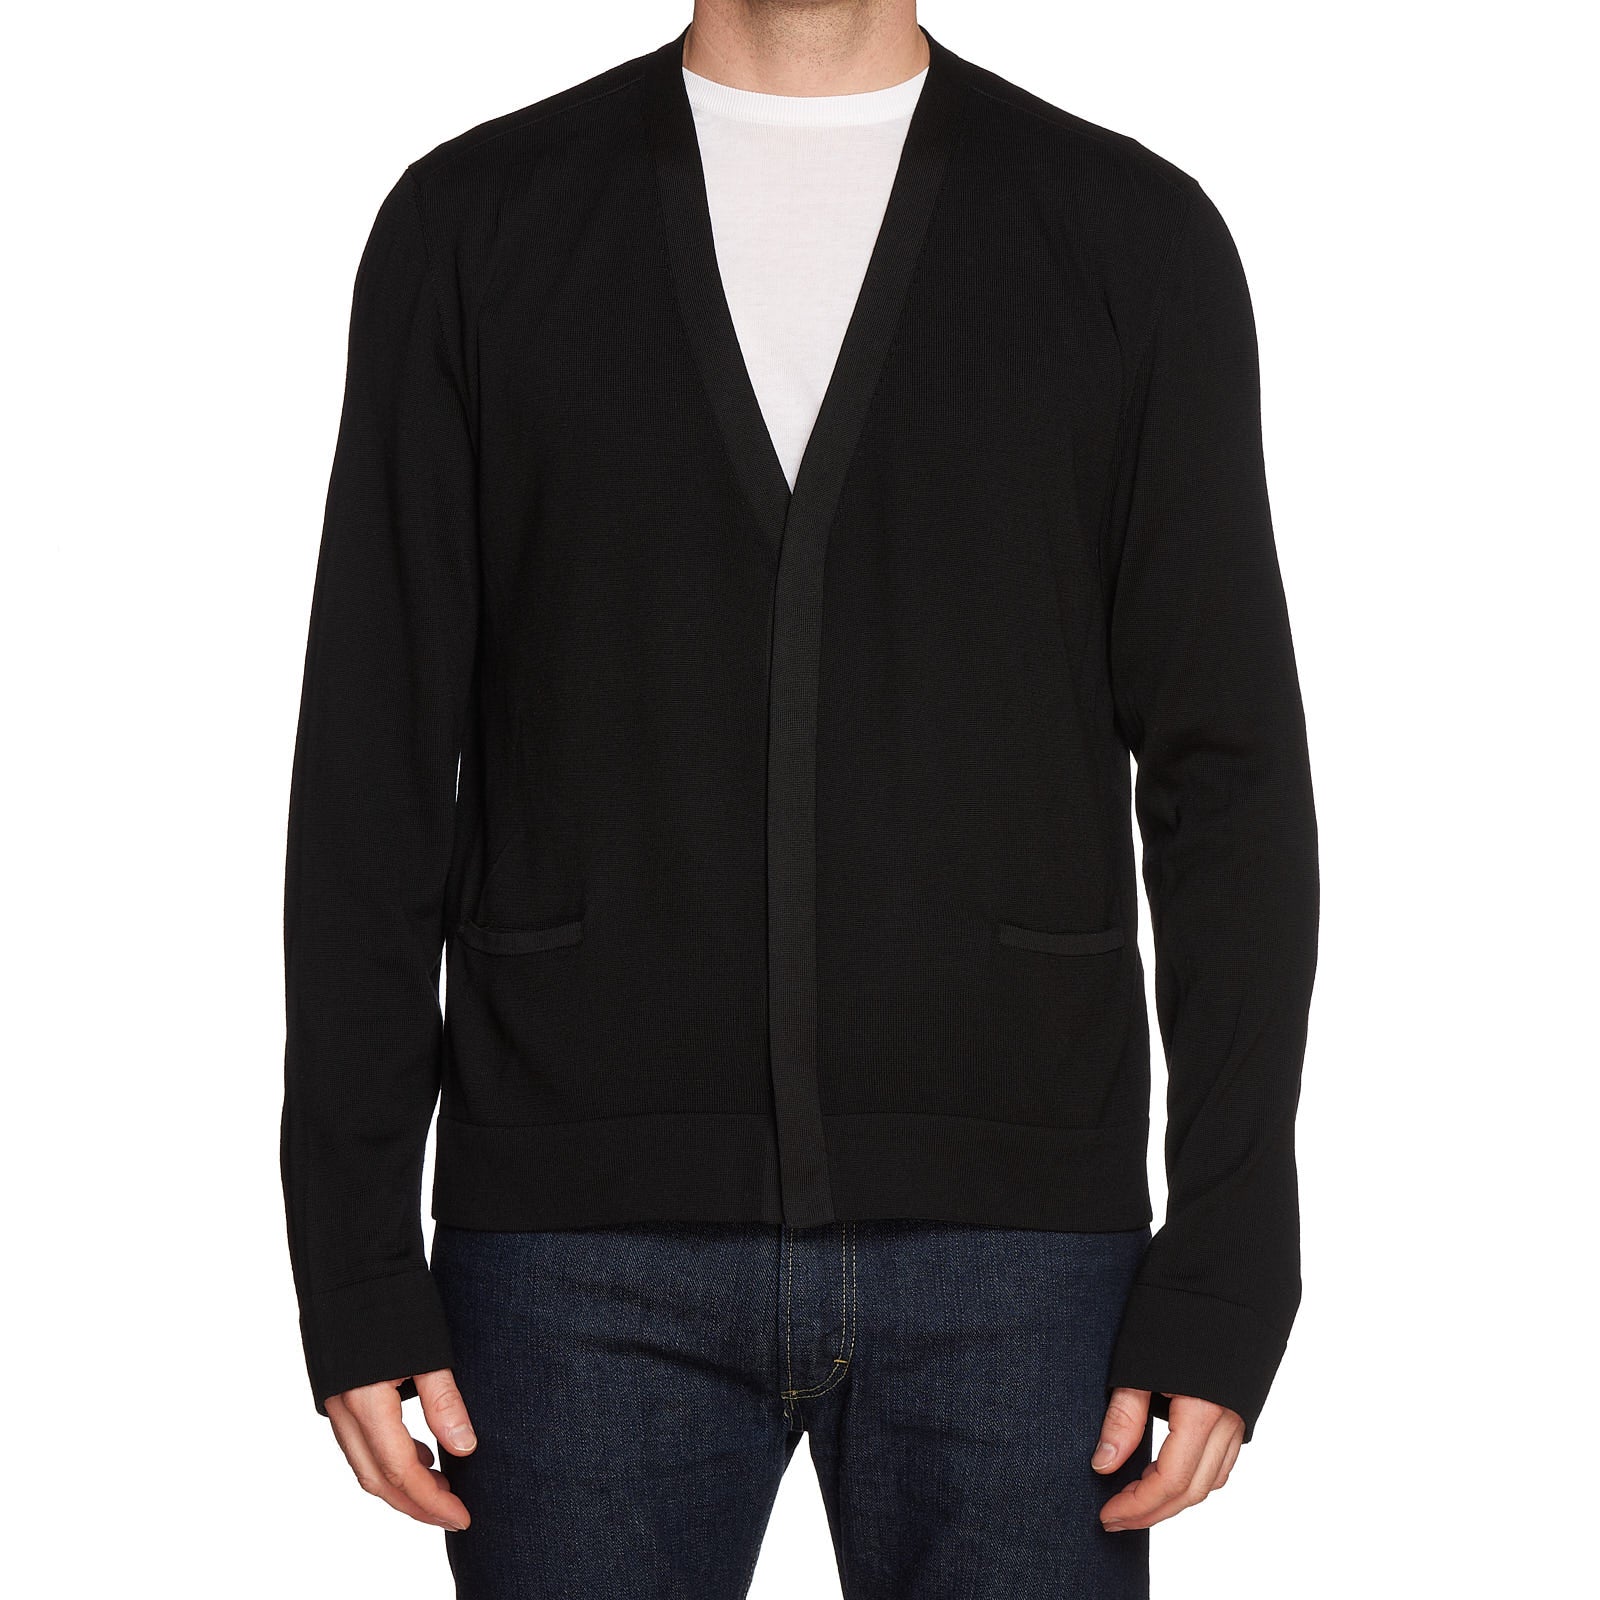 BERLUTI Paris Black Wool Knit Cardigan Sweater with Mulberry Silk Details NEW Size M